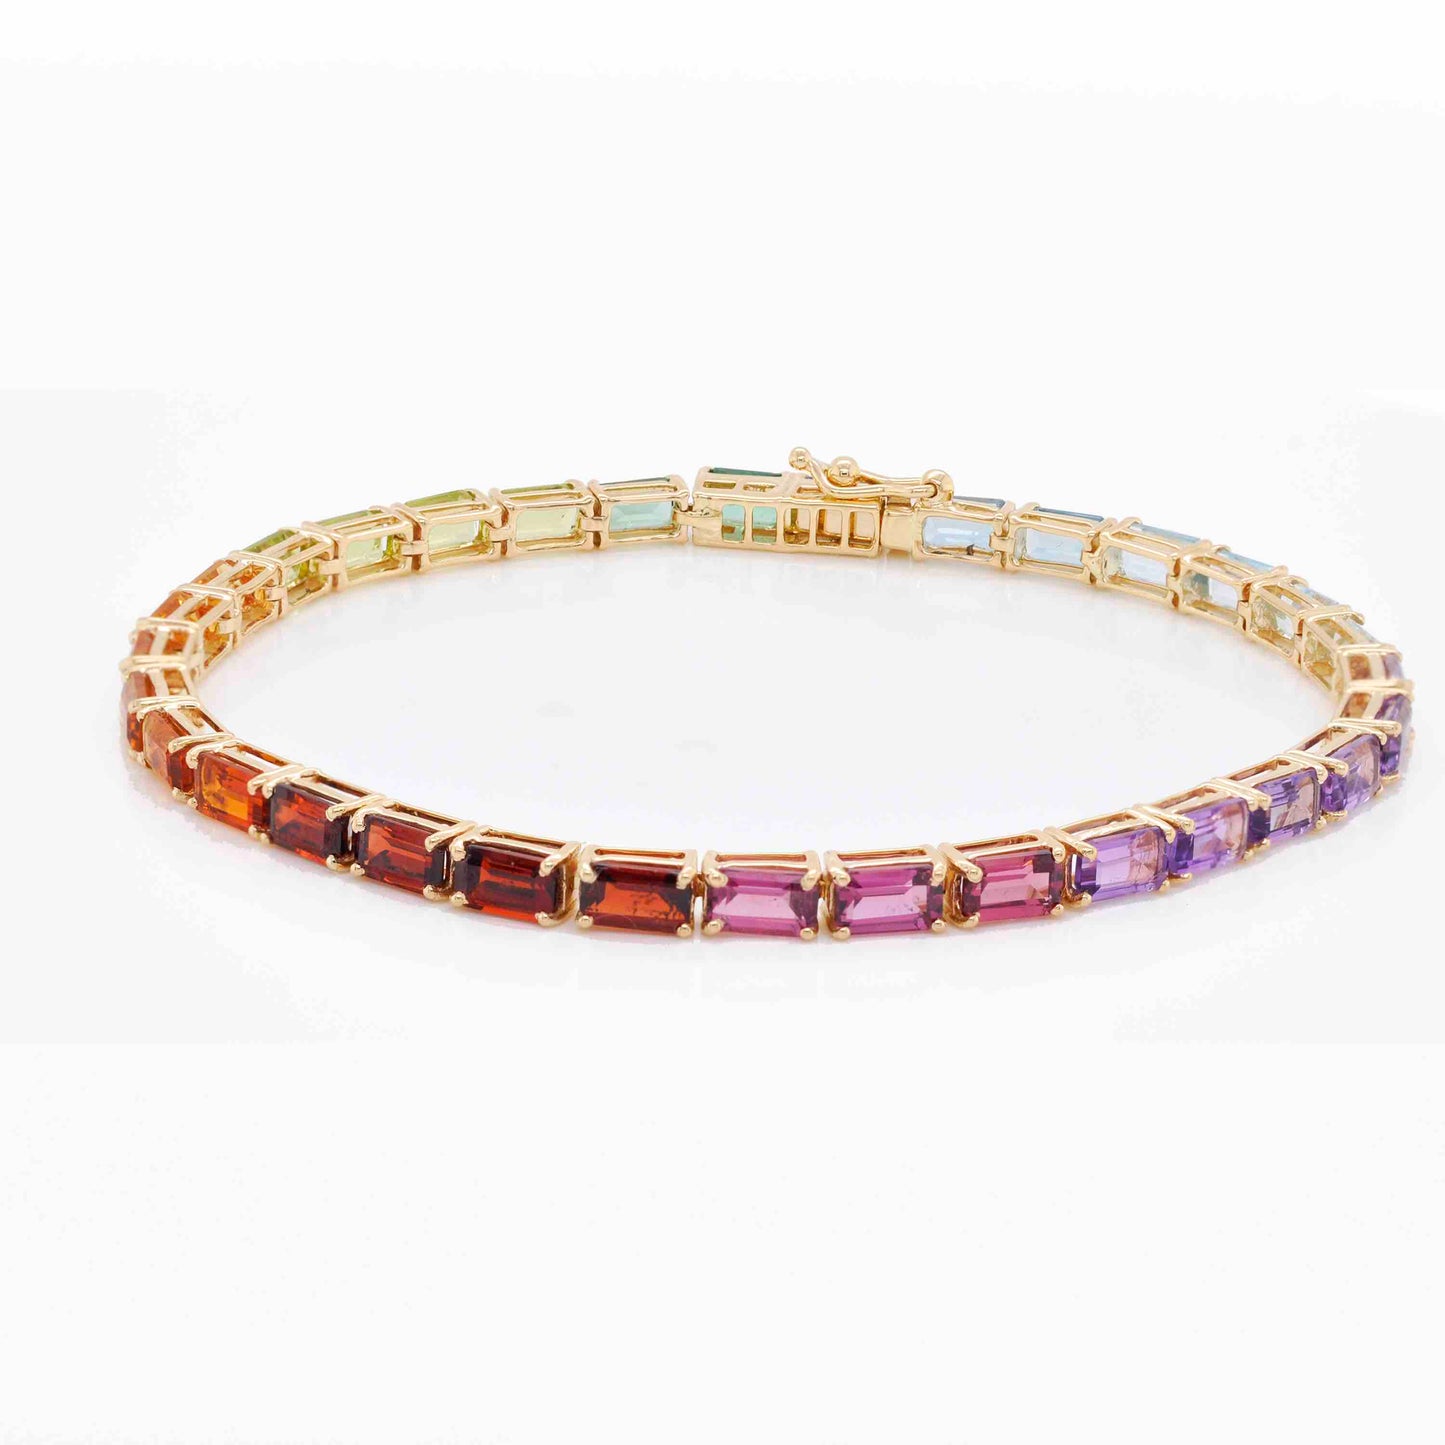  tennis line bracelet with gemstones